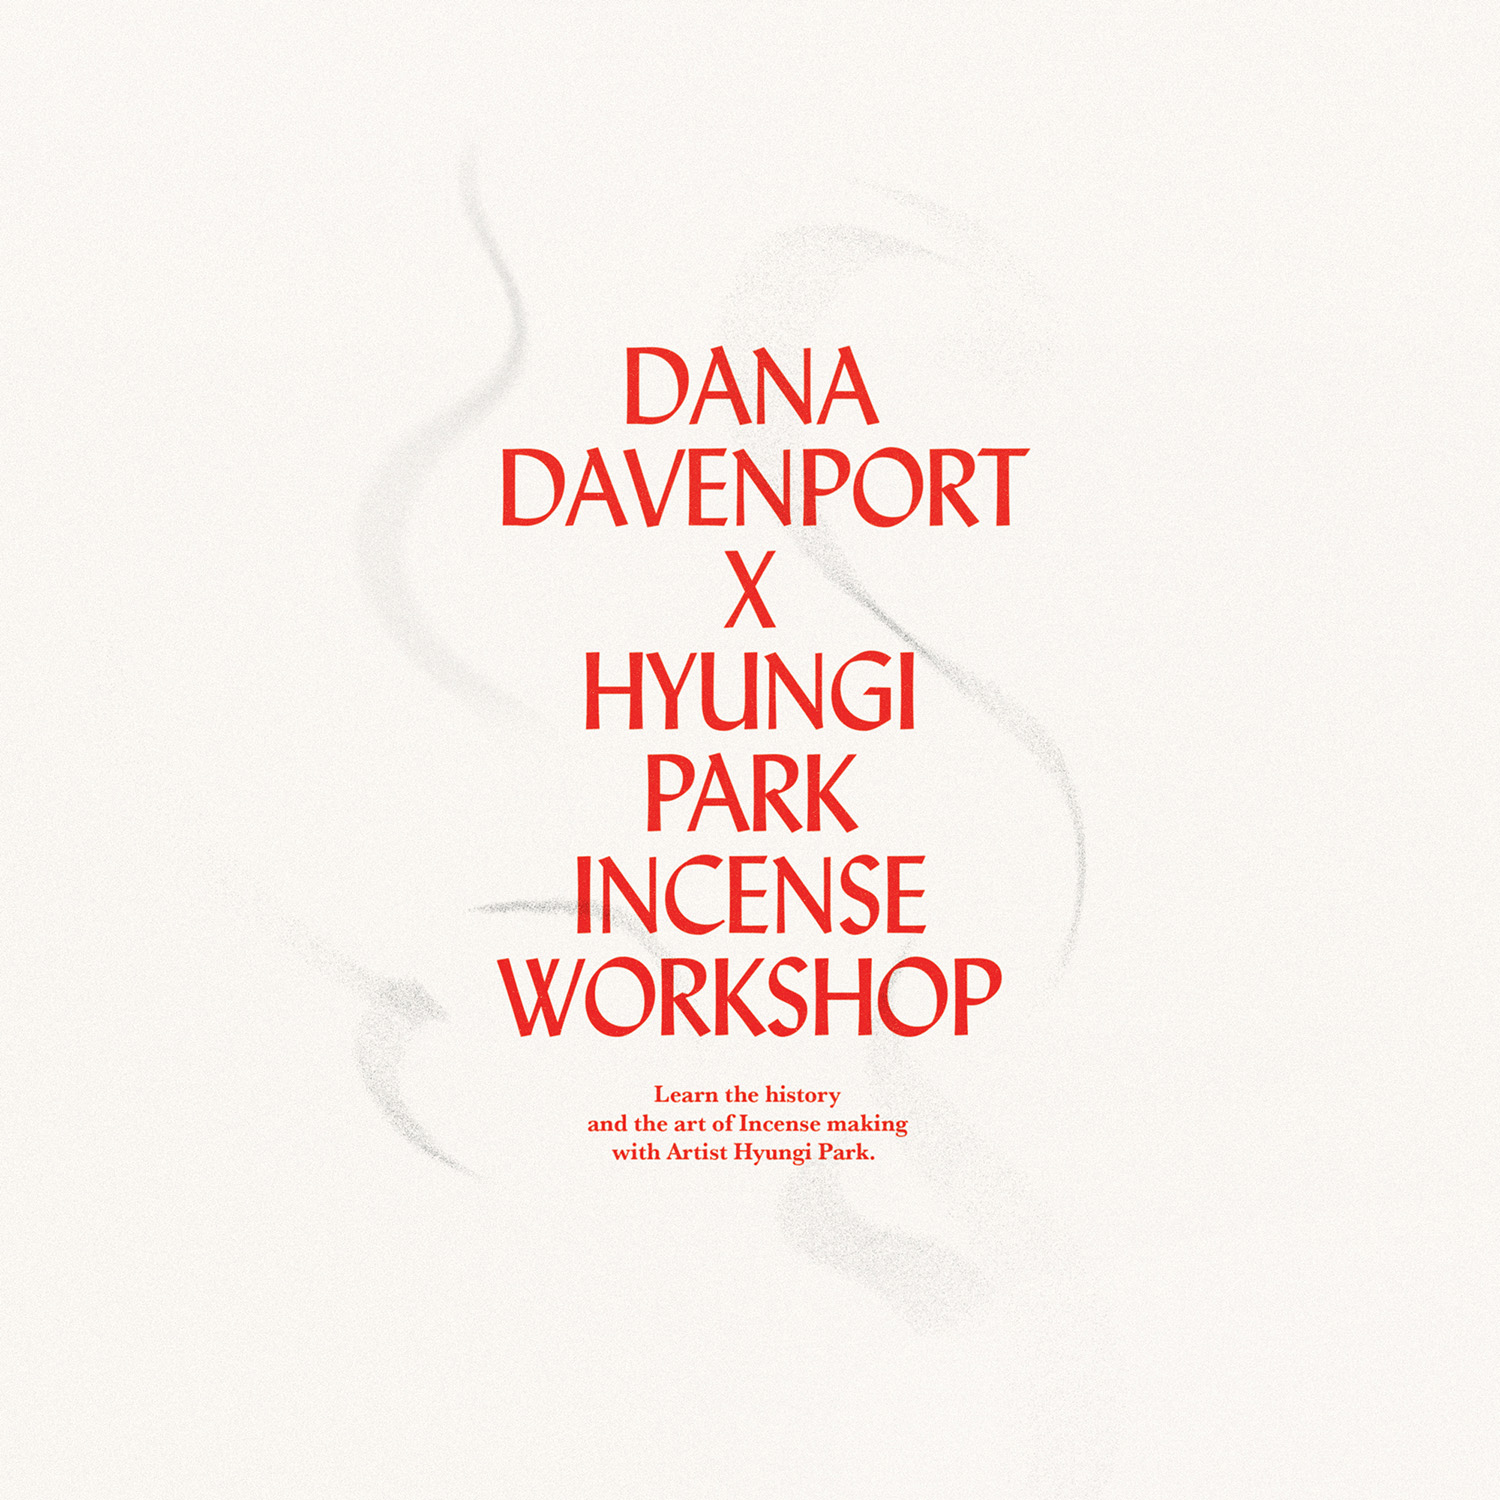 A poster to Dana Davenport x Hyungi Park Incense Workshop at the LINE LA